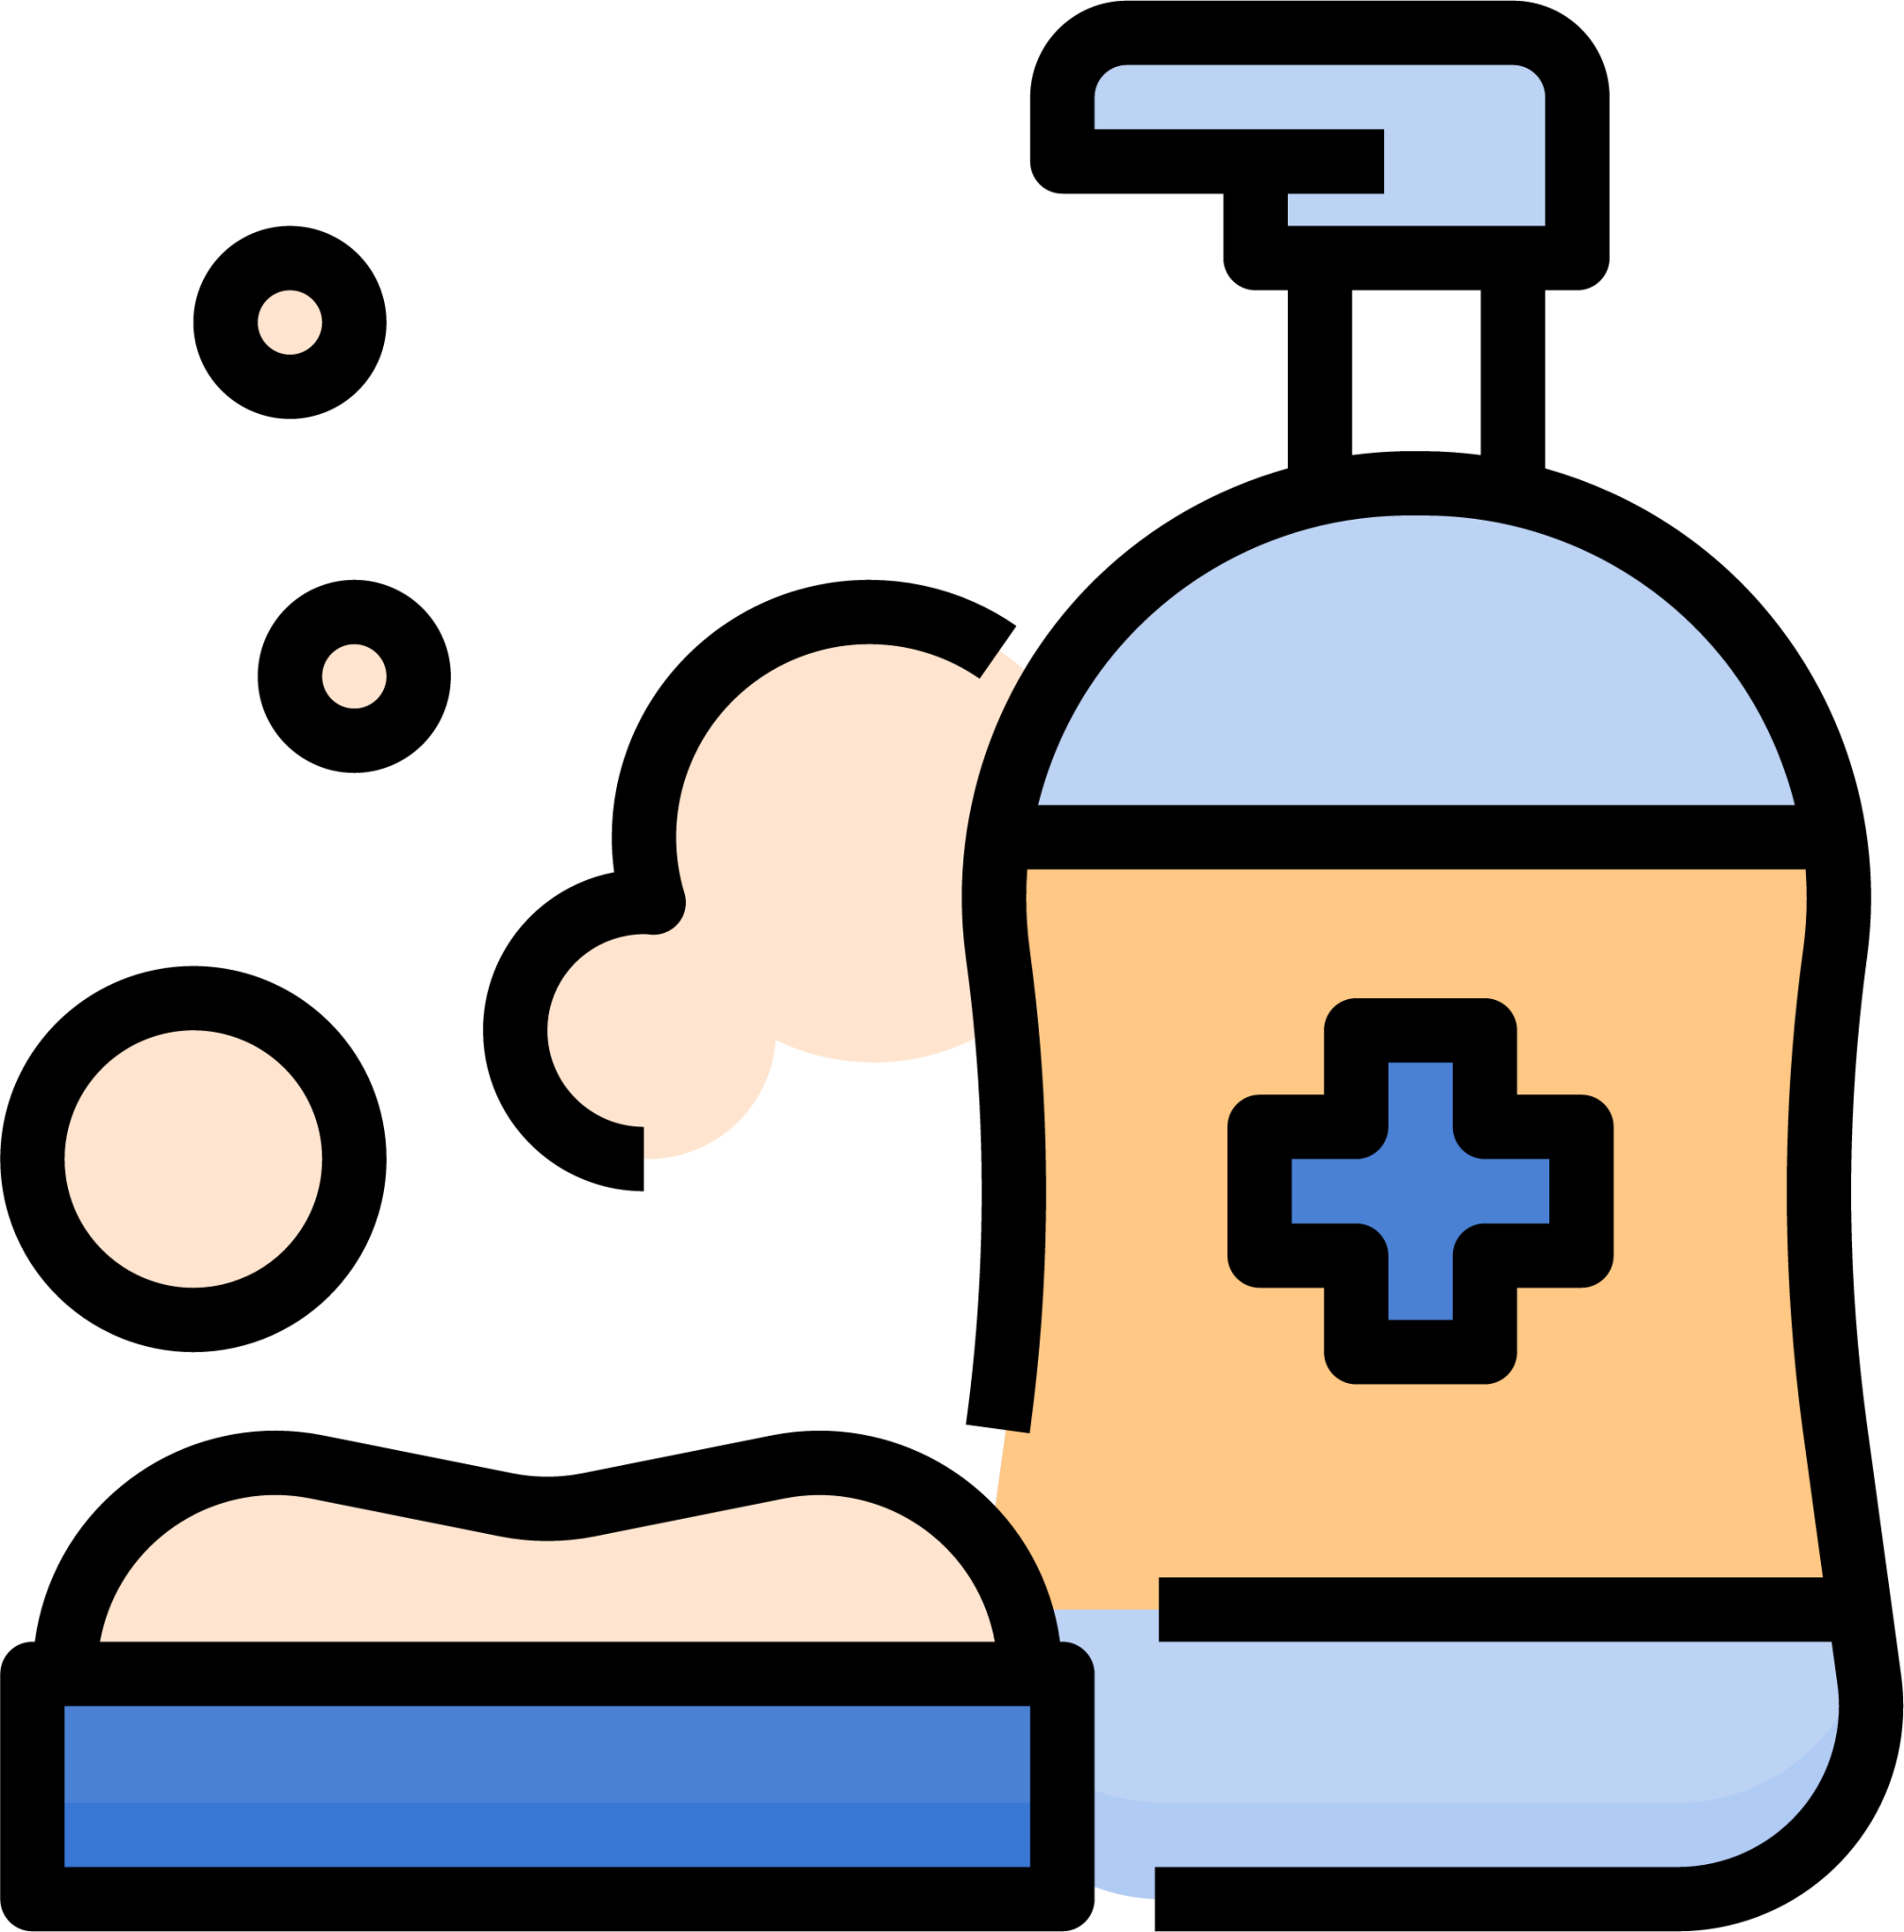 cleaning coronavirus gel health infection soap sterile illustration